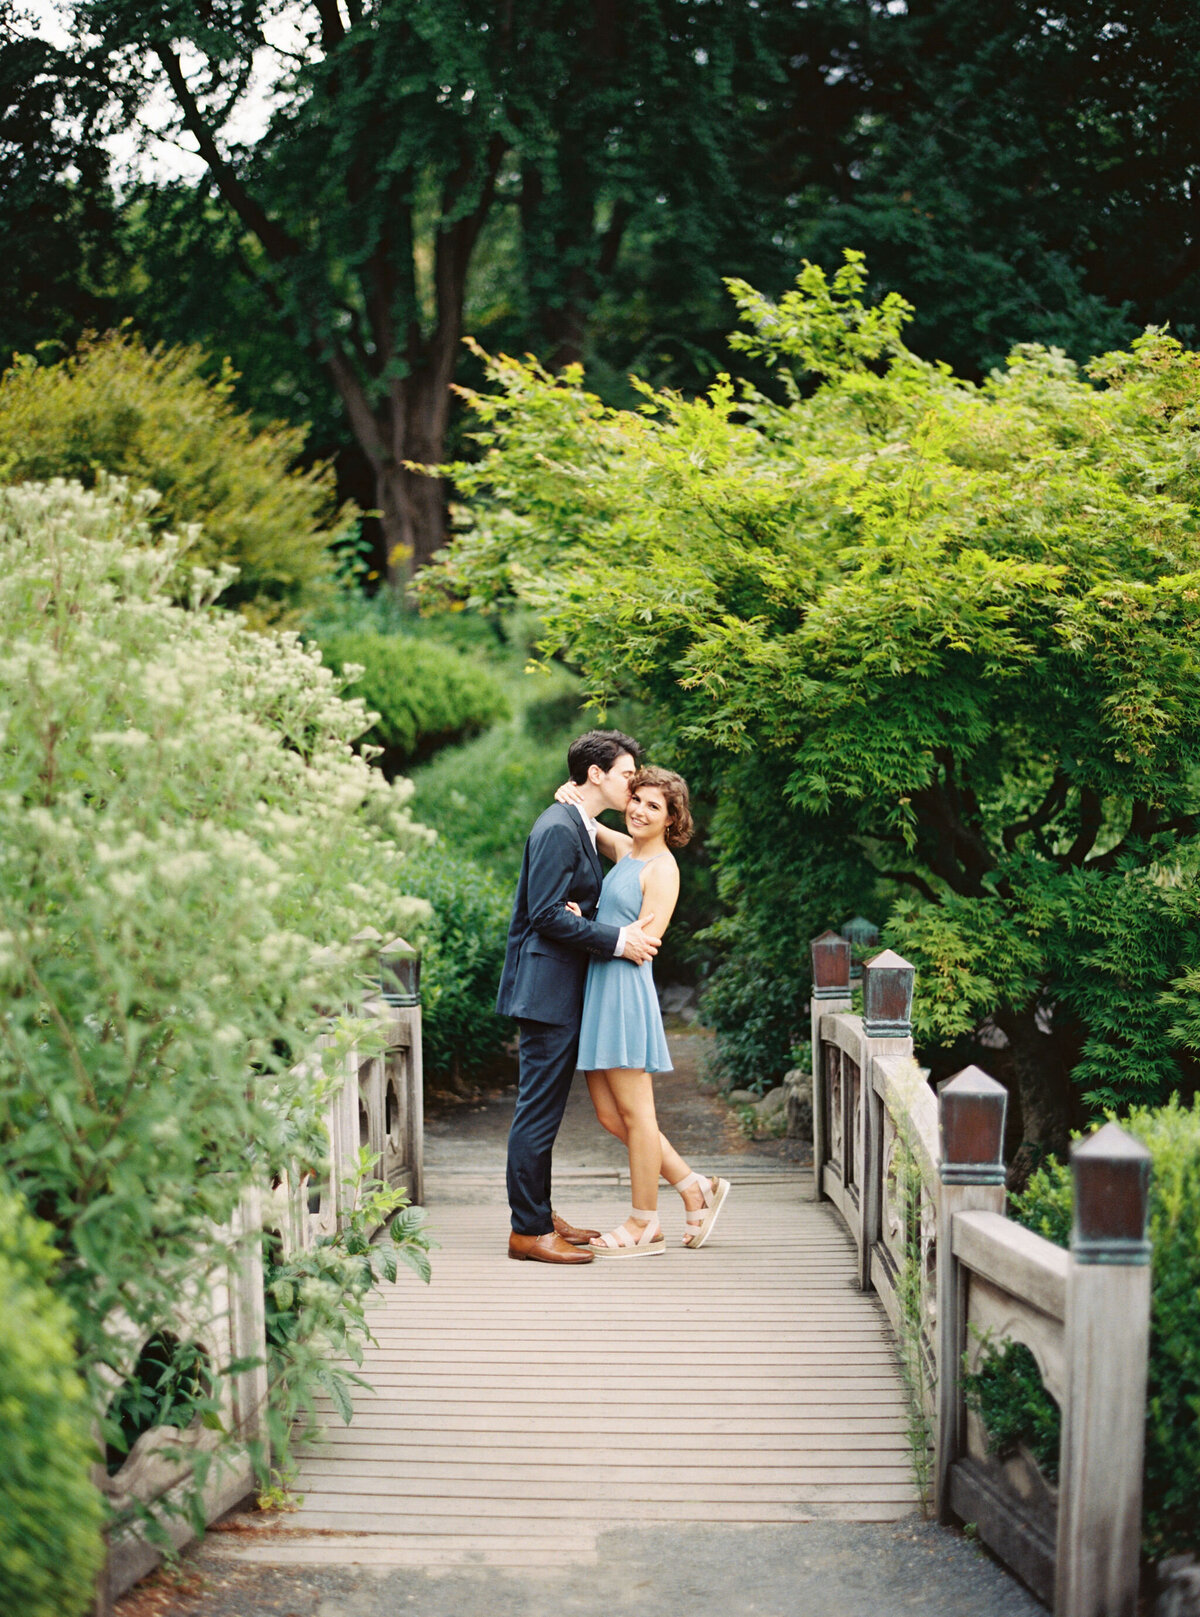 Kirsten&Frank-Fine-Art-Film-Wedding-Photographer-New-York-City-Botanical-Garden-7